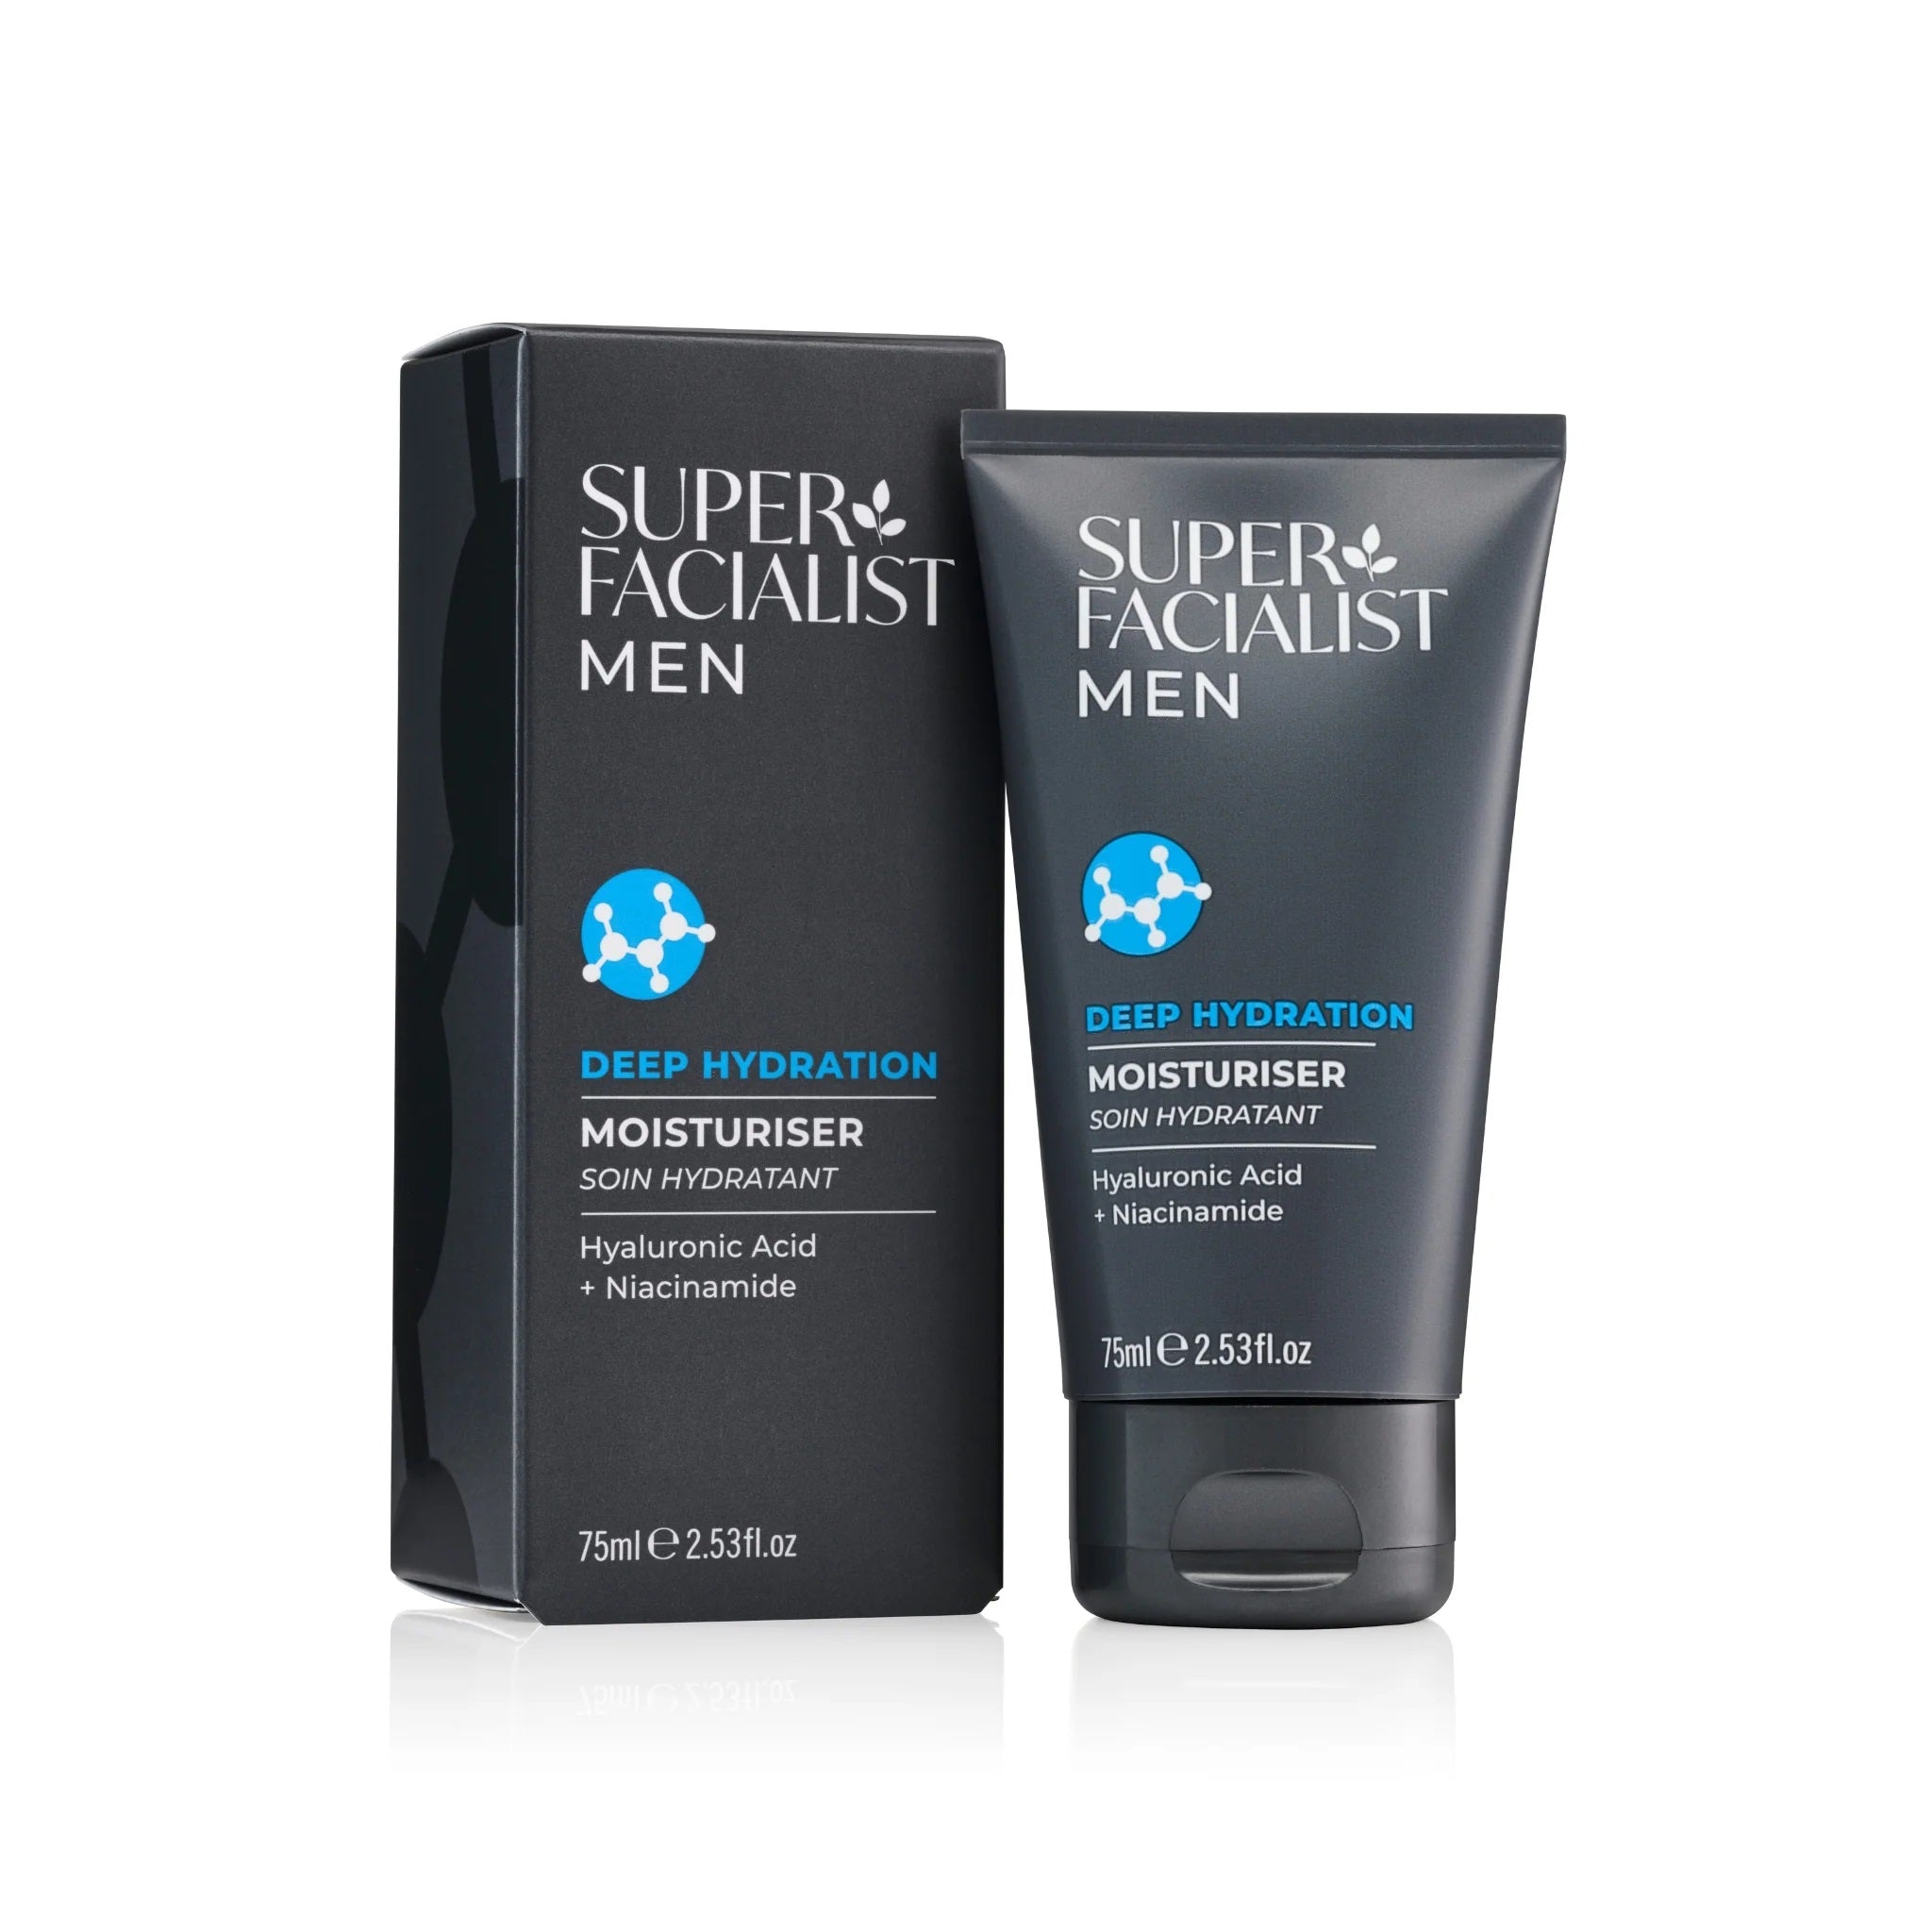 super-facialist-men-deep-hydration-moisturiser-for-dry-skin-קרם לחות אנטי אייג'ינג לעור יבש לגבר